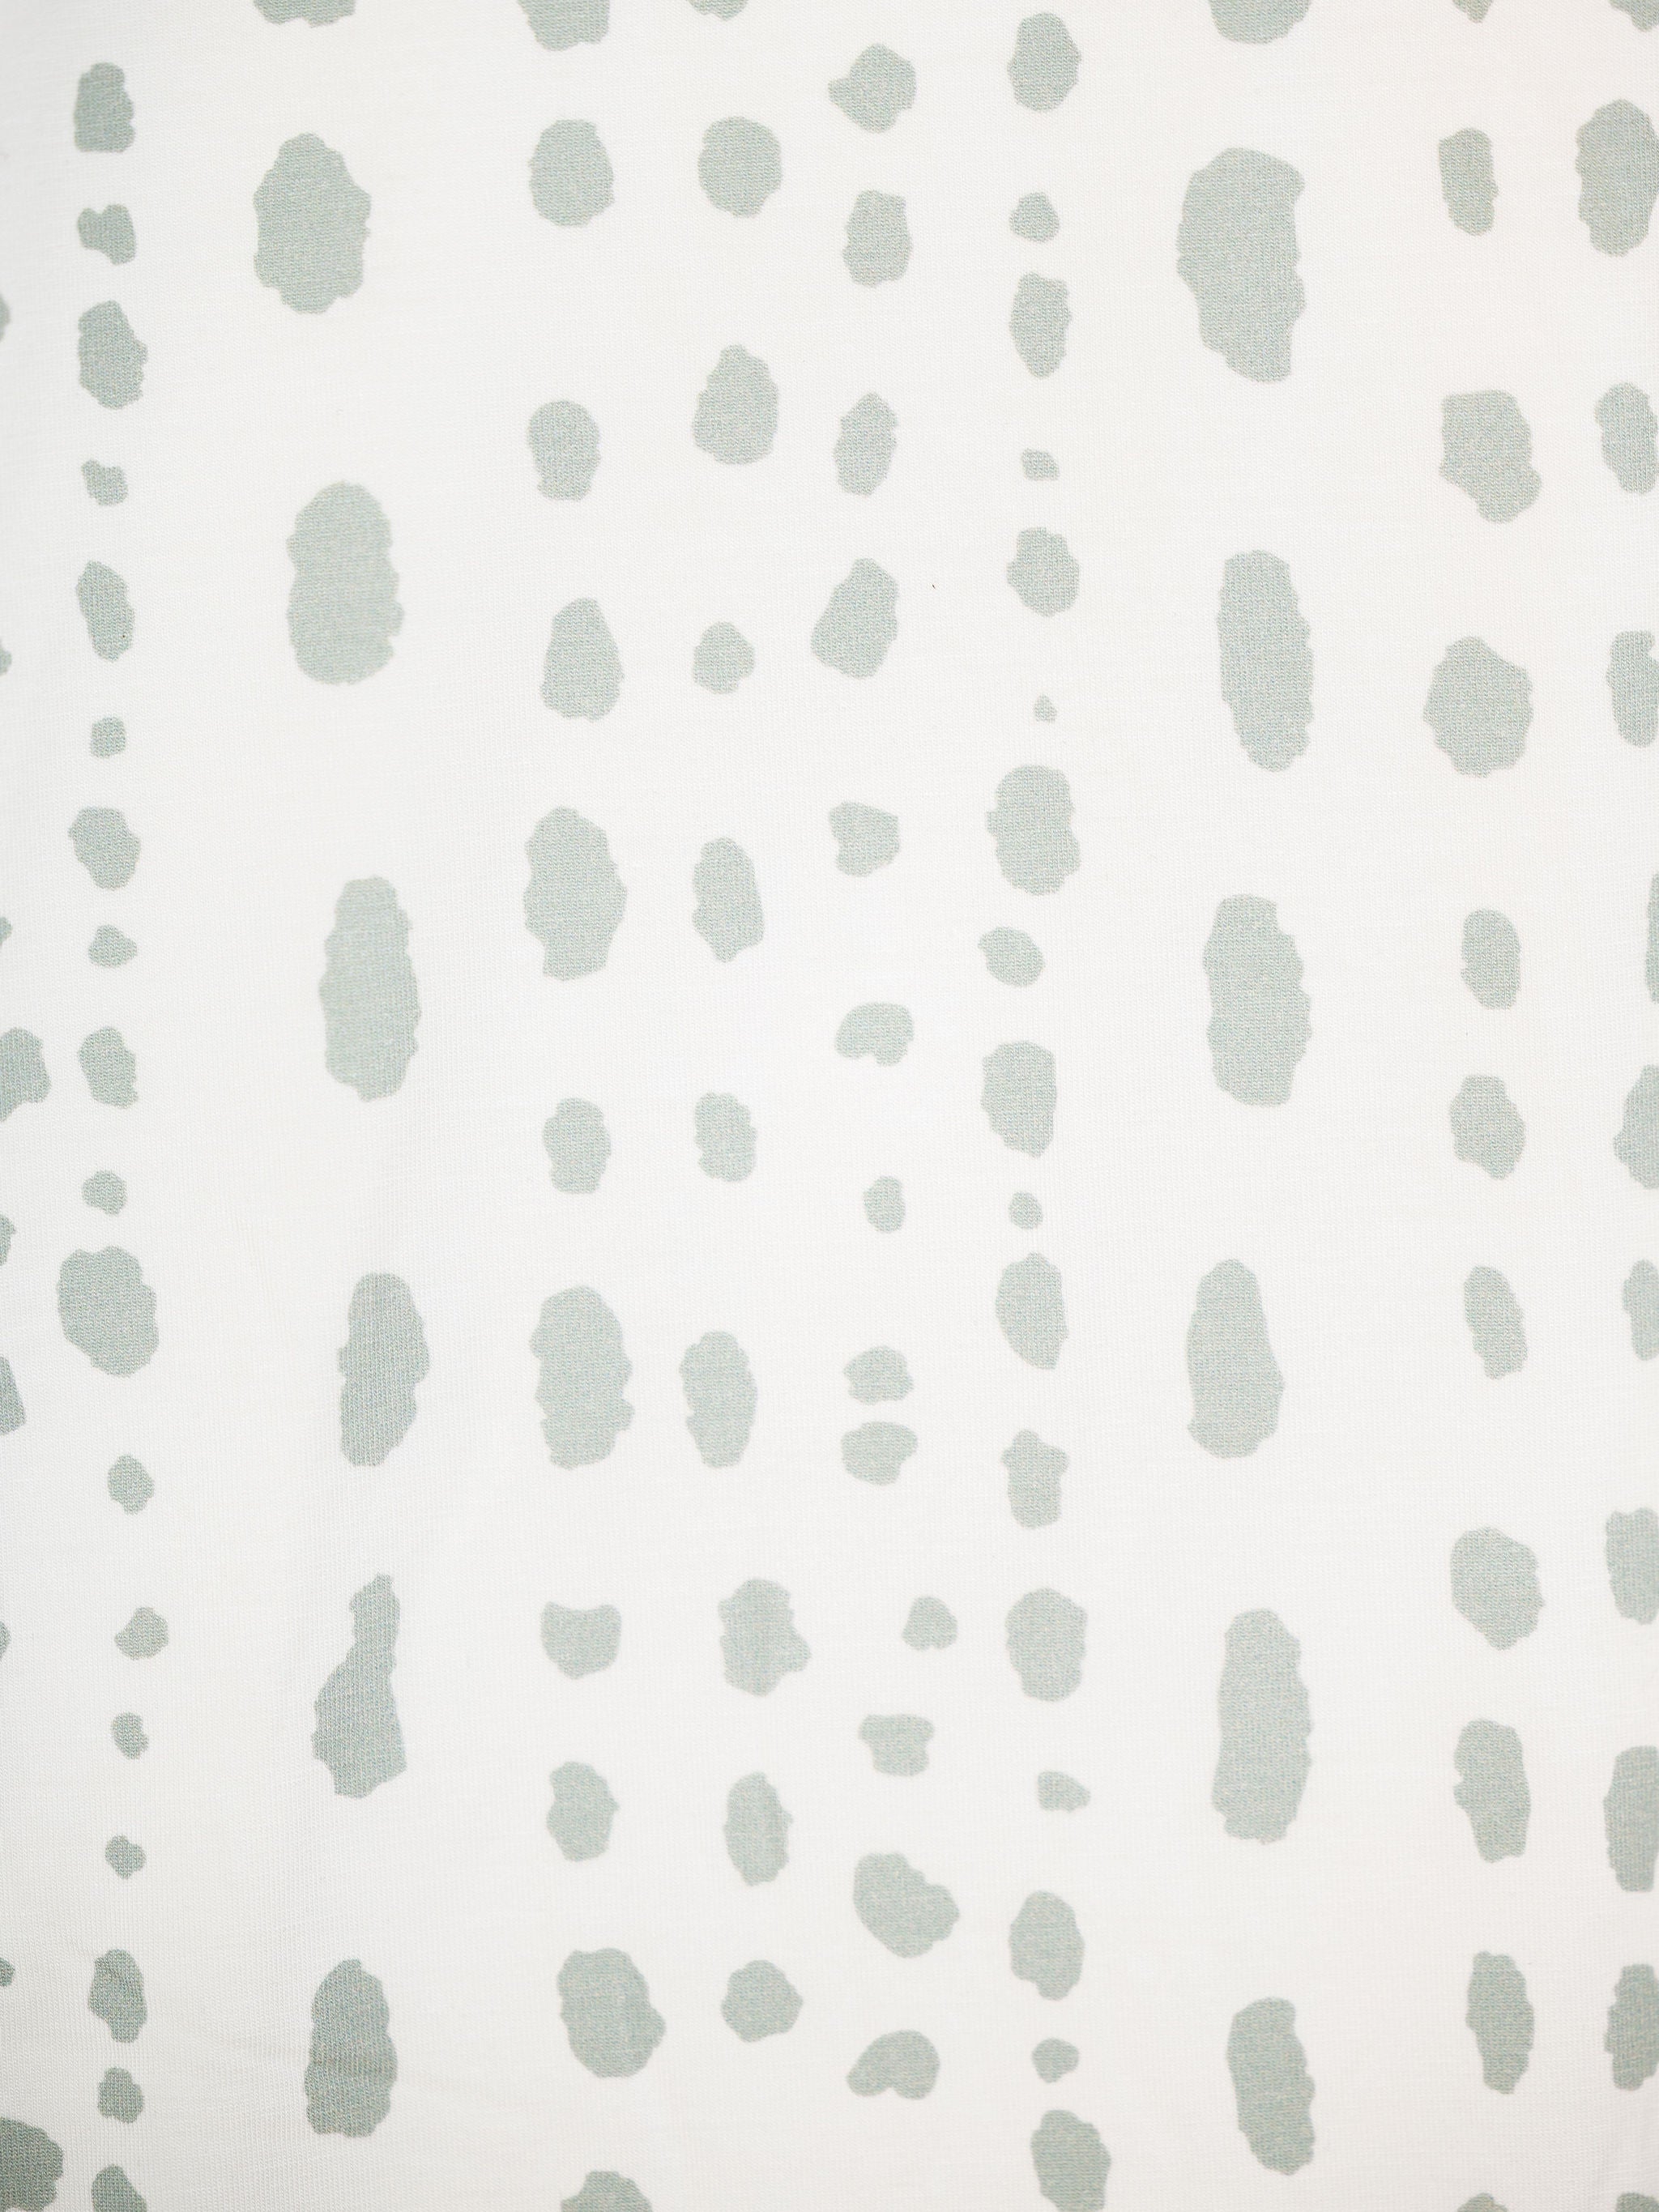 Crib Sheet - Dalmatian Dot